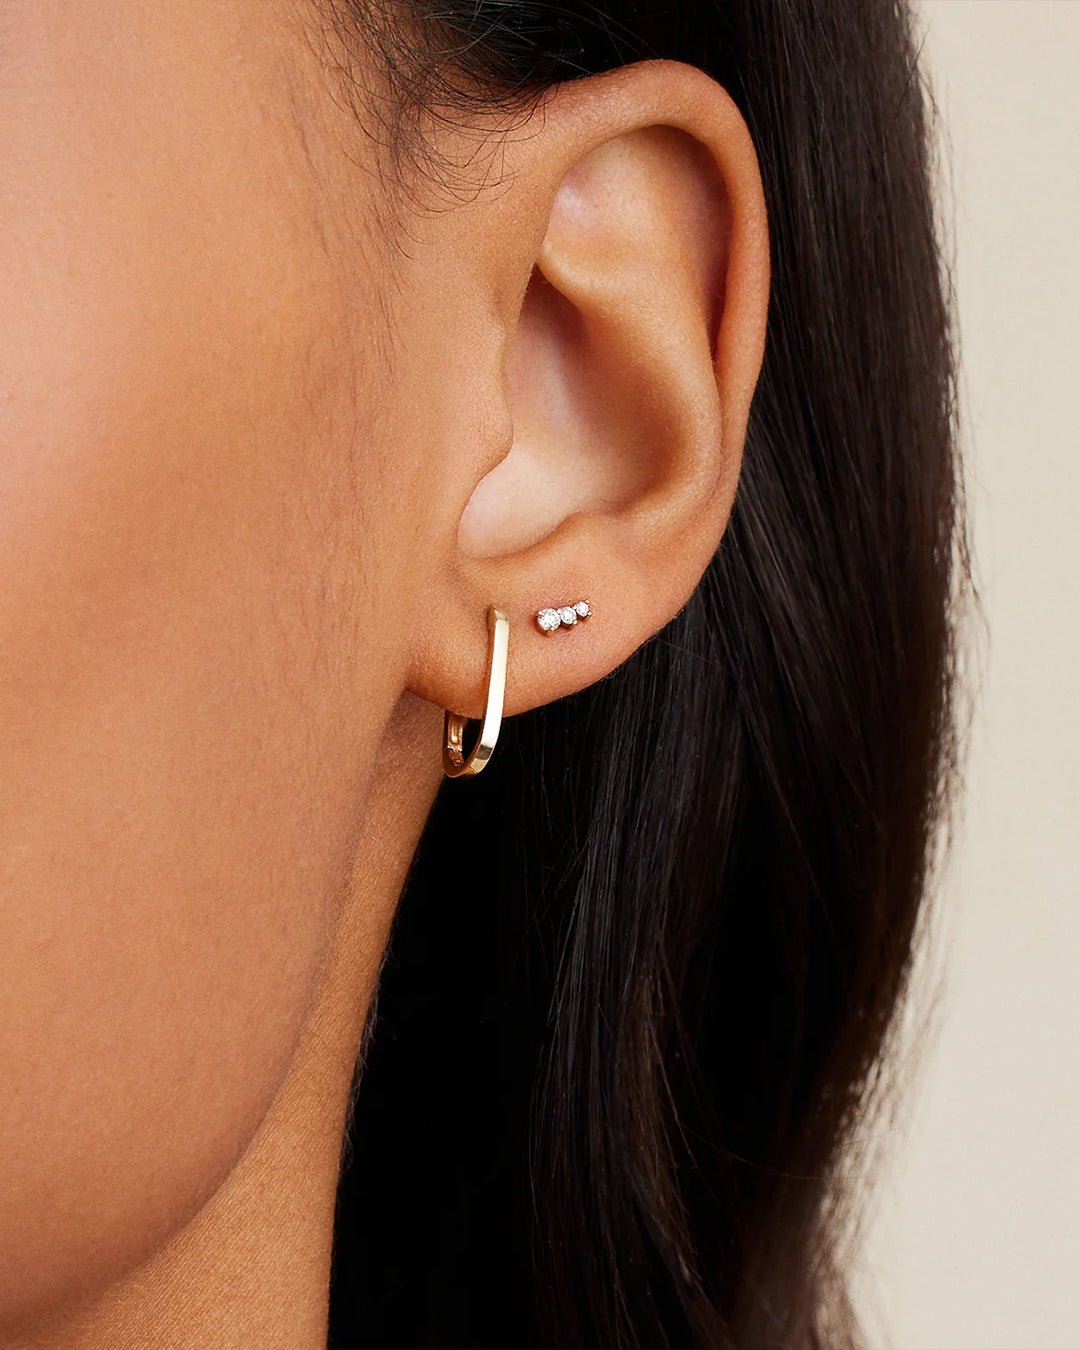 Newport Threaded Flat Back Studs Earring in 14K Solid Gold/Pair, Women's by Gorjana